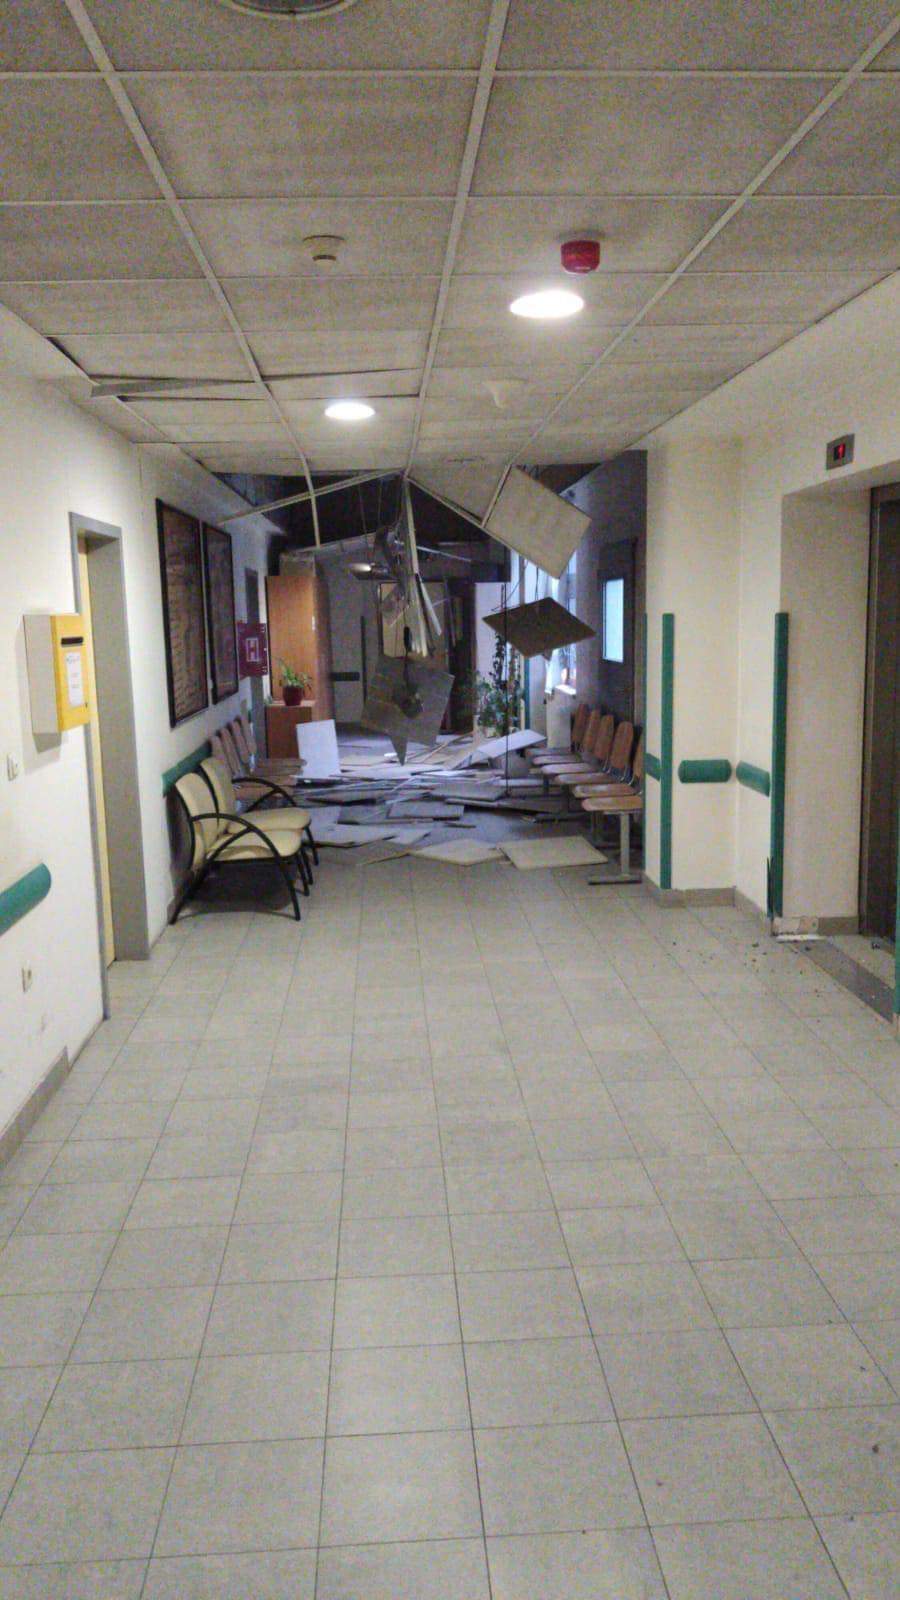 zagreb-earthquake-rebro-hospital.jpg